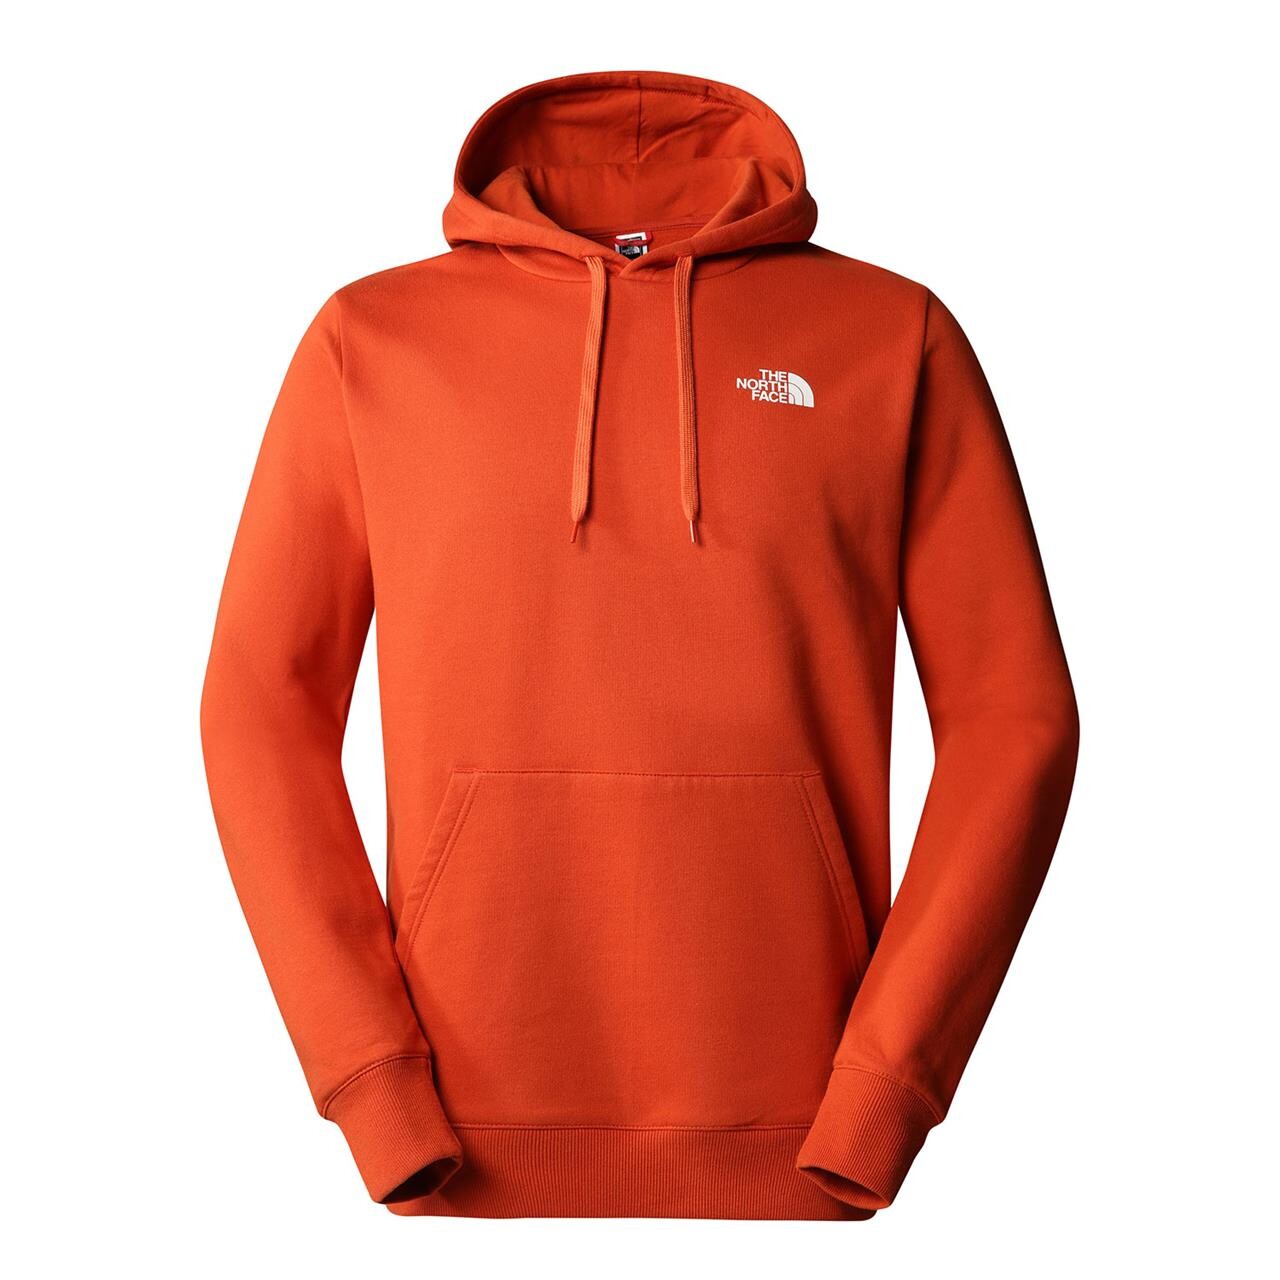 The North Face Mens Outdoor Graphic Hoodie Light (Orange (RUSTED BRONZE) Medium)